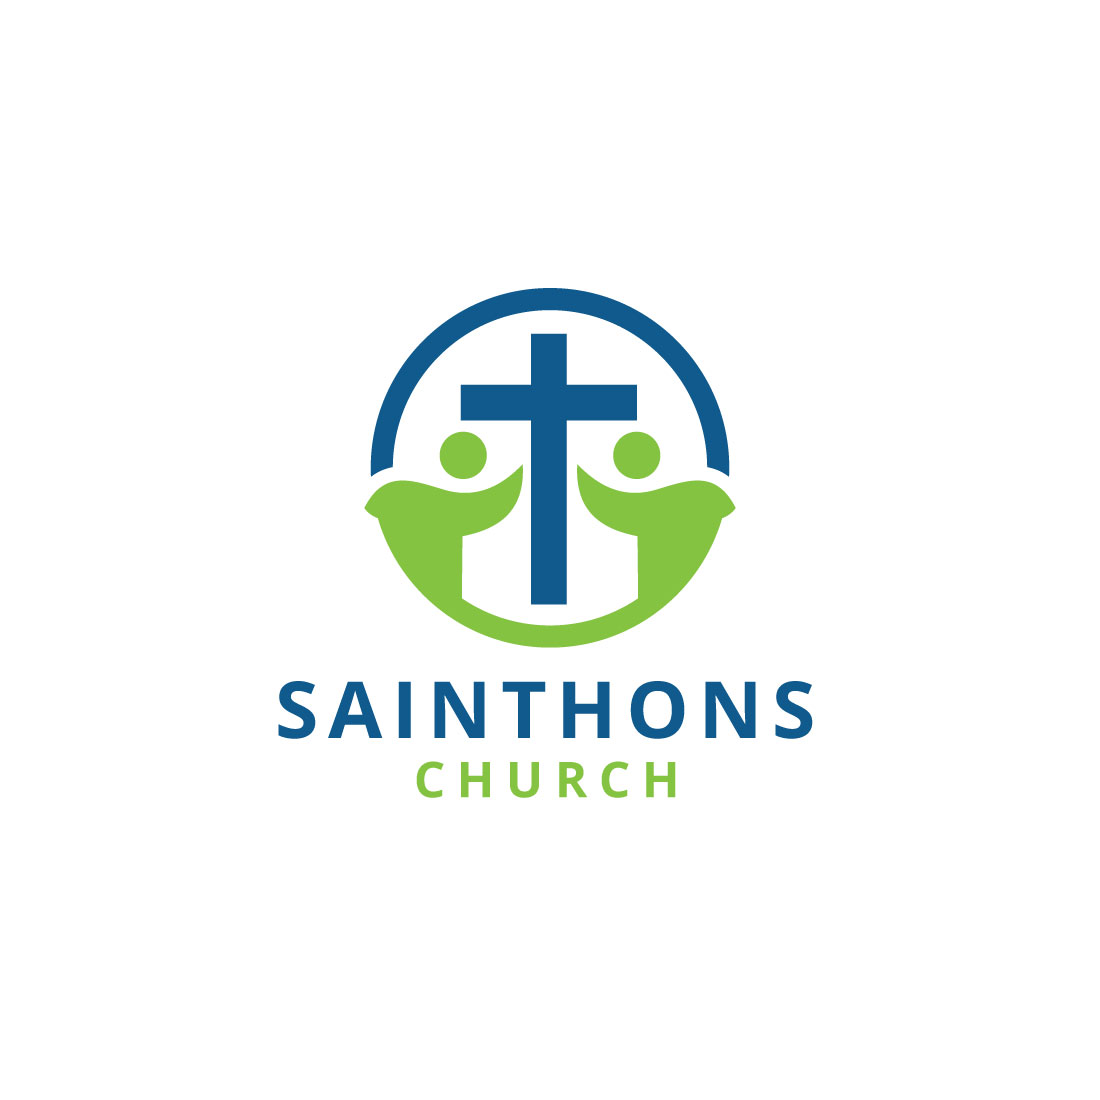 Church logo, religious family icon, Christian sign cover image.